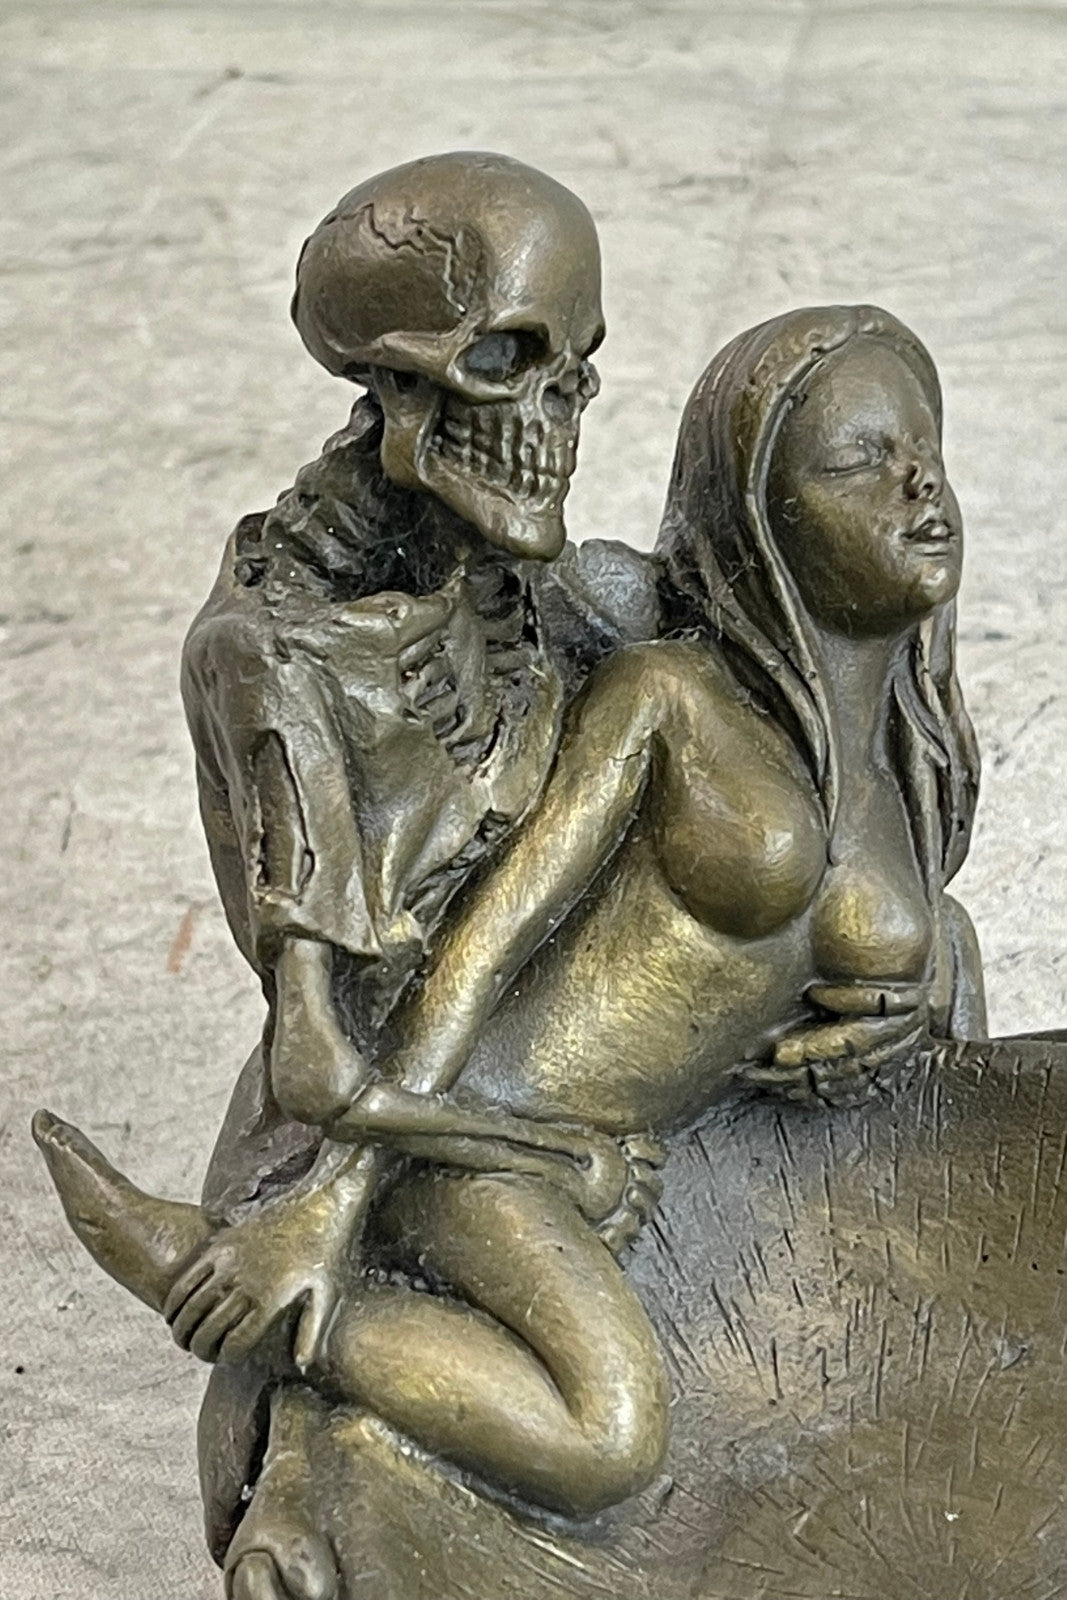 Handcrafted bronze sculpture SALE Ash Girl Nude With Skeleton Cast Hot Deco Art